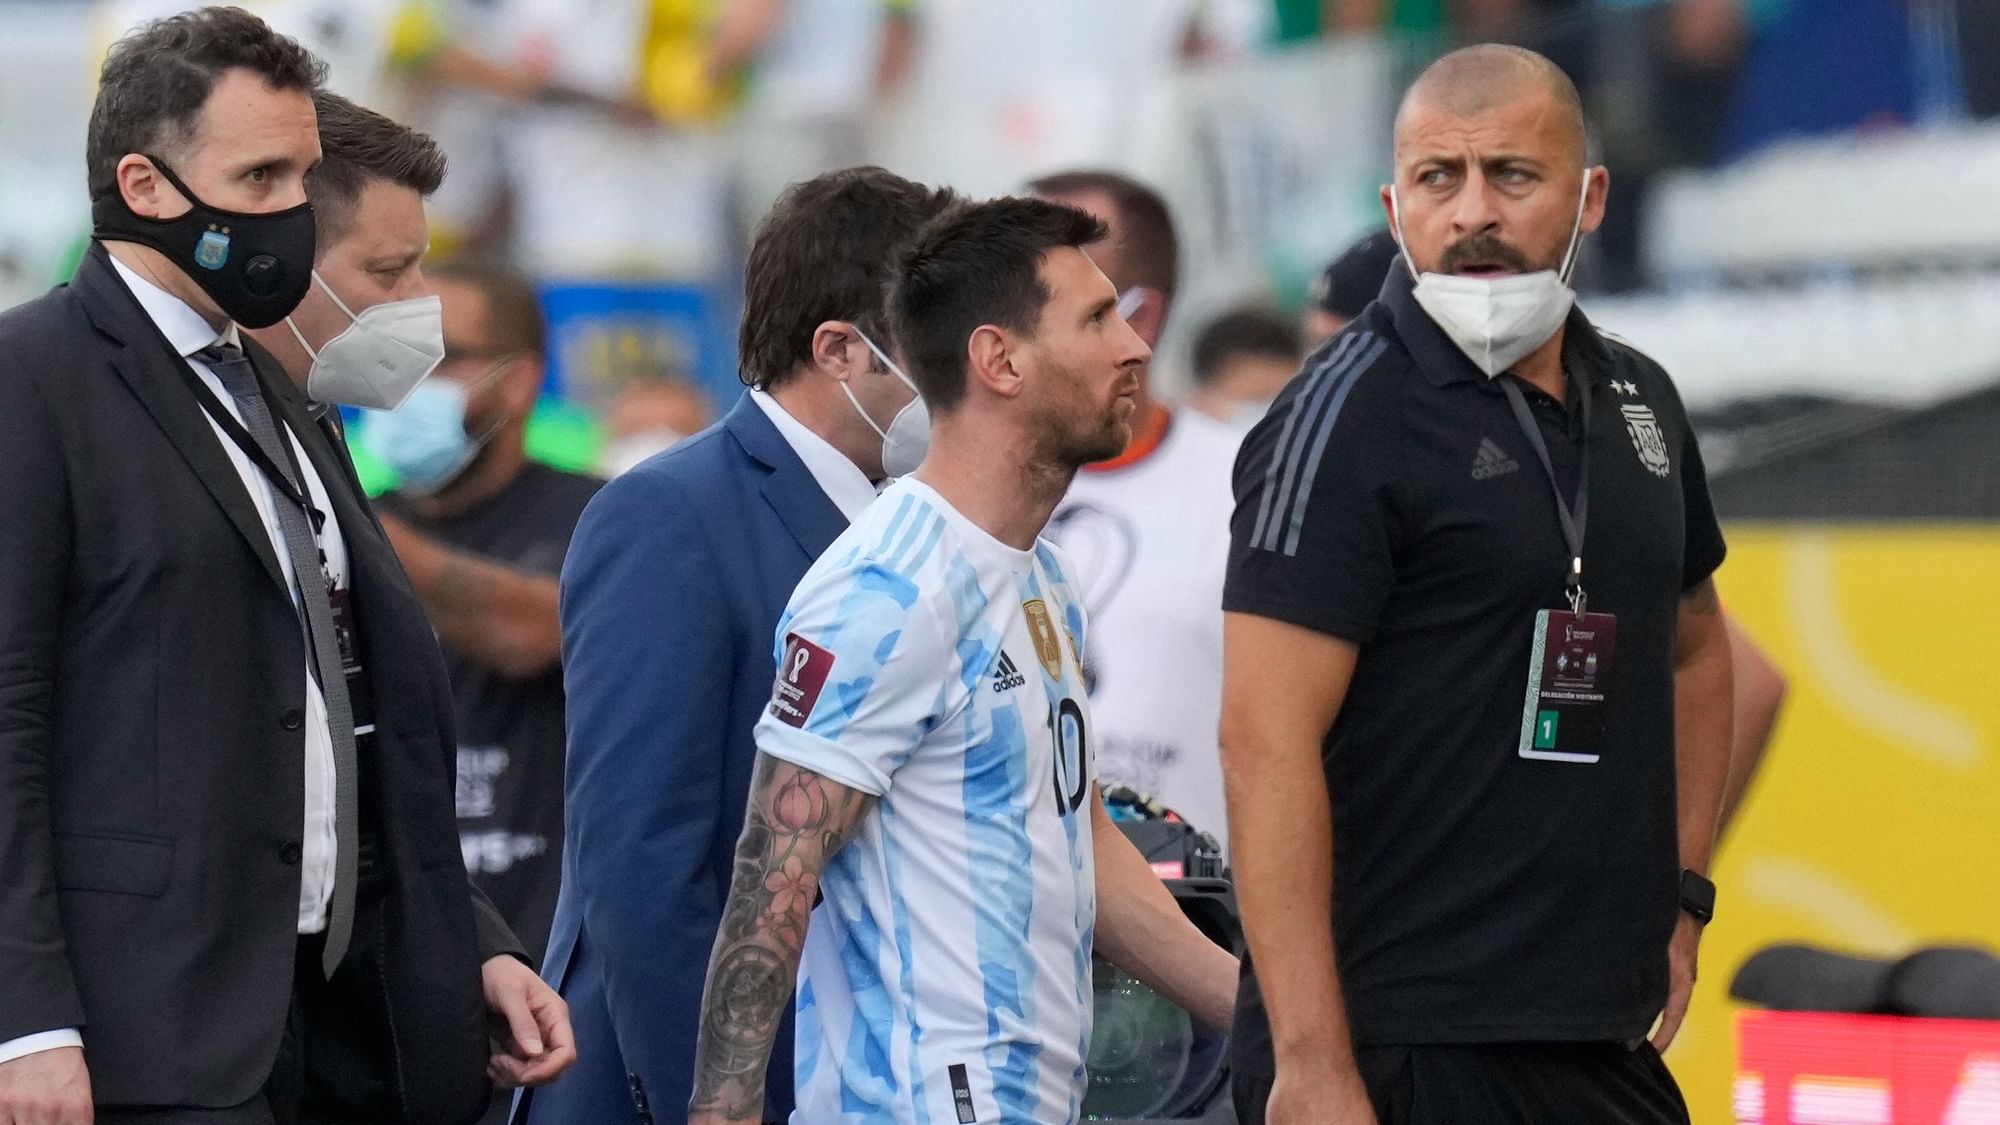 <div class="paragraphs"><p>Lionel Messi walks off at Corinthians Arena after the Brazil vs Argentina match was suspended.&nbsp;</p></div>